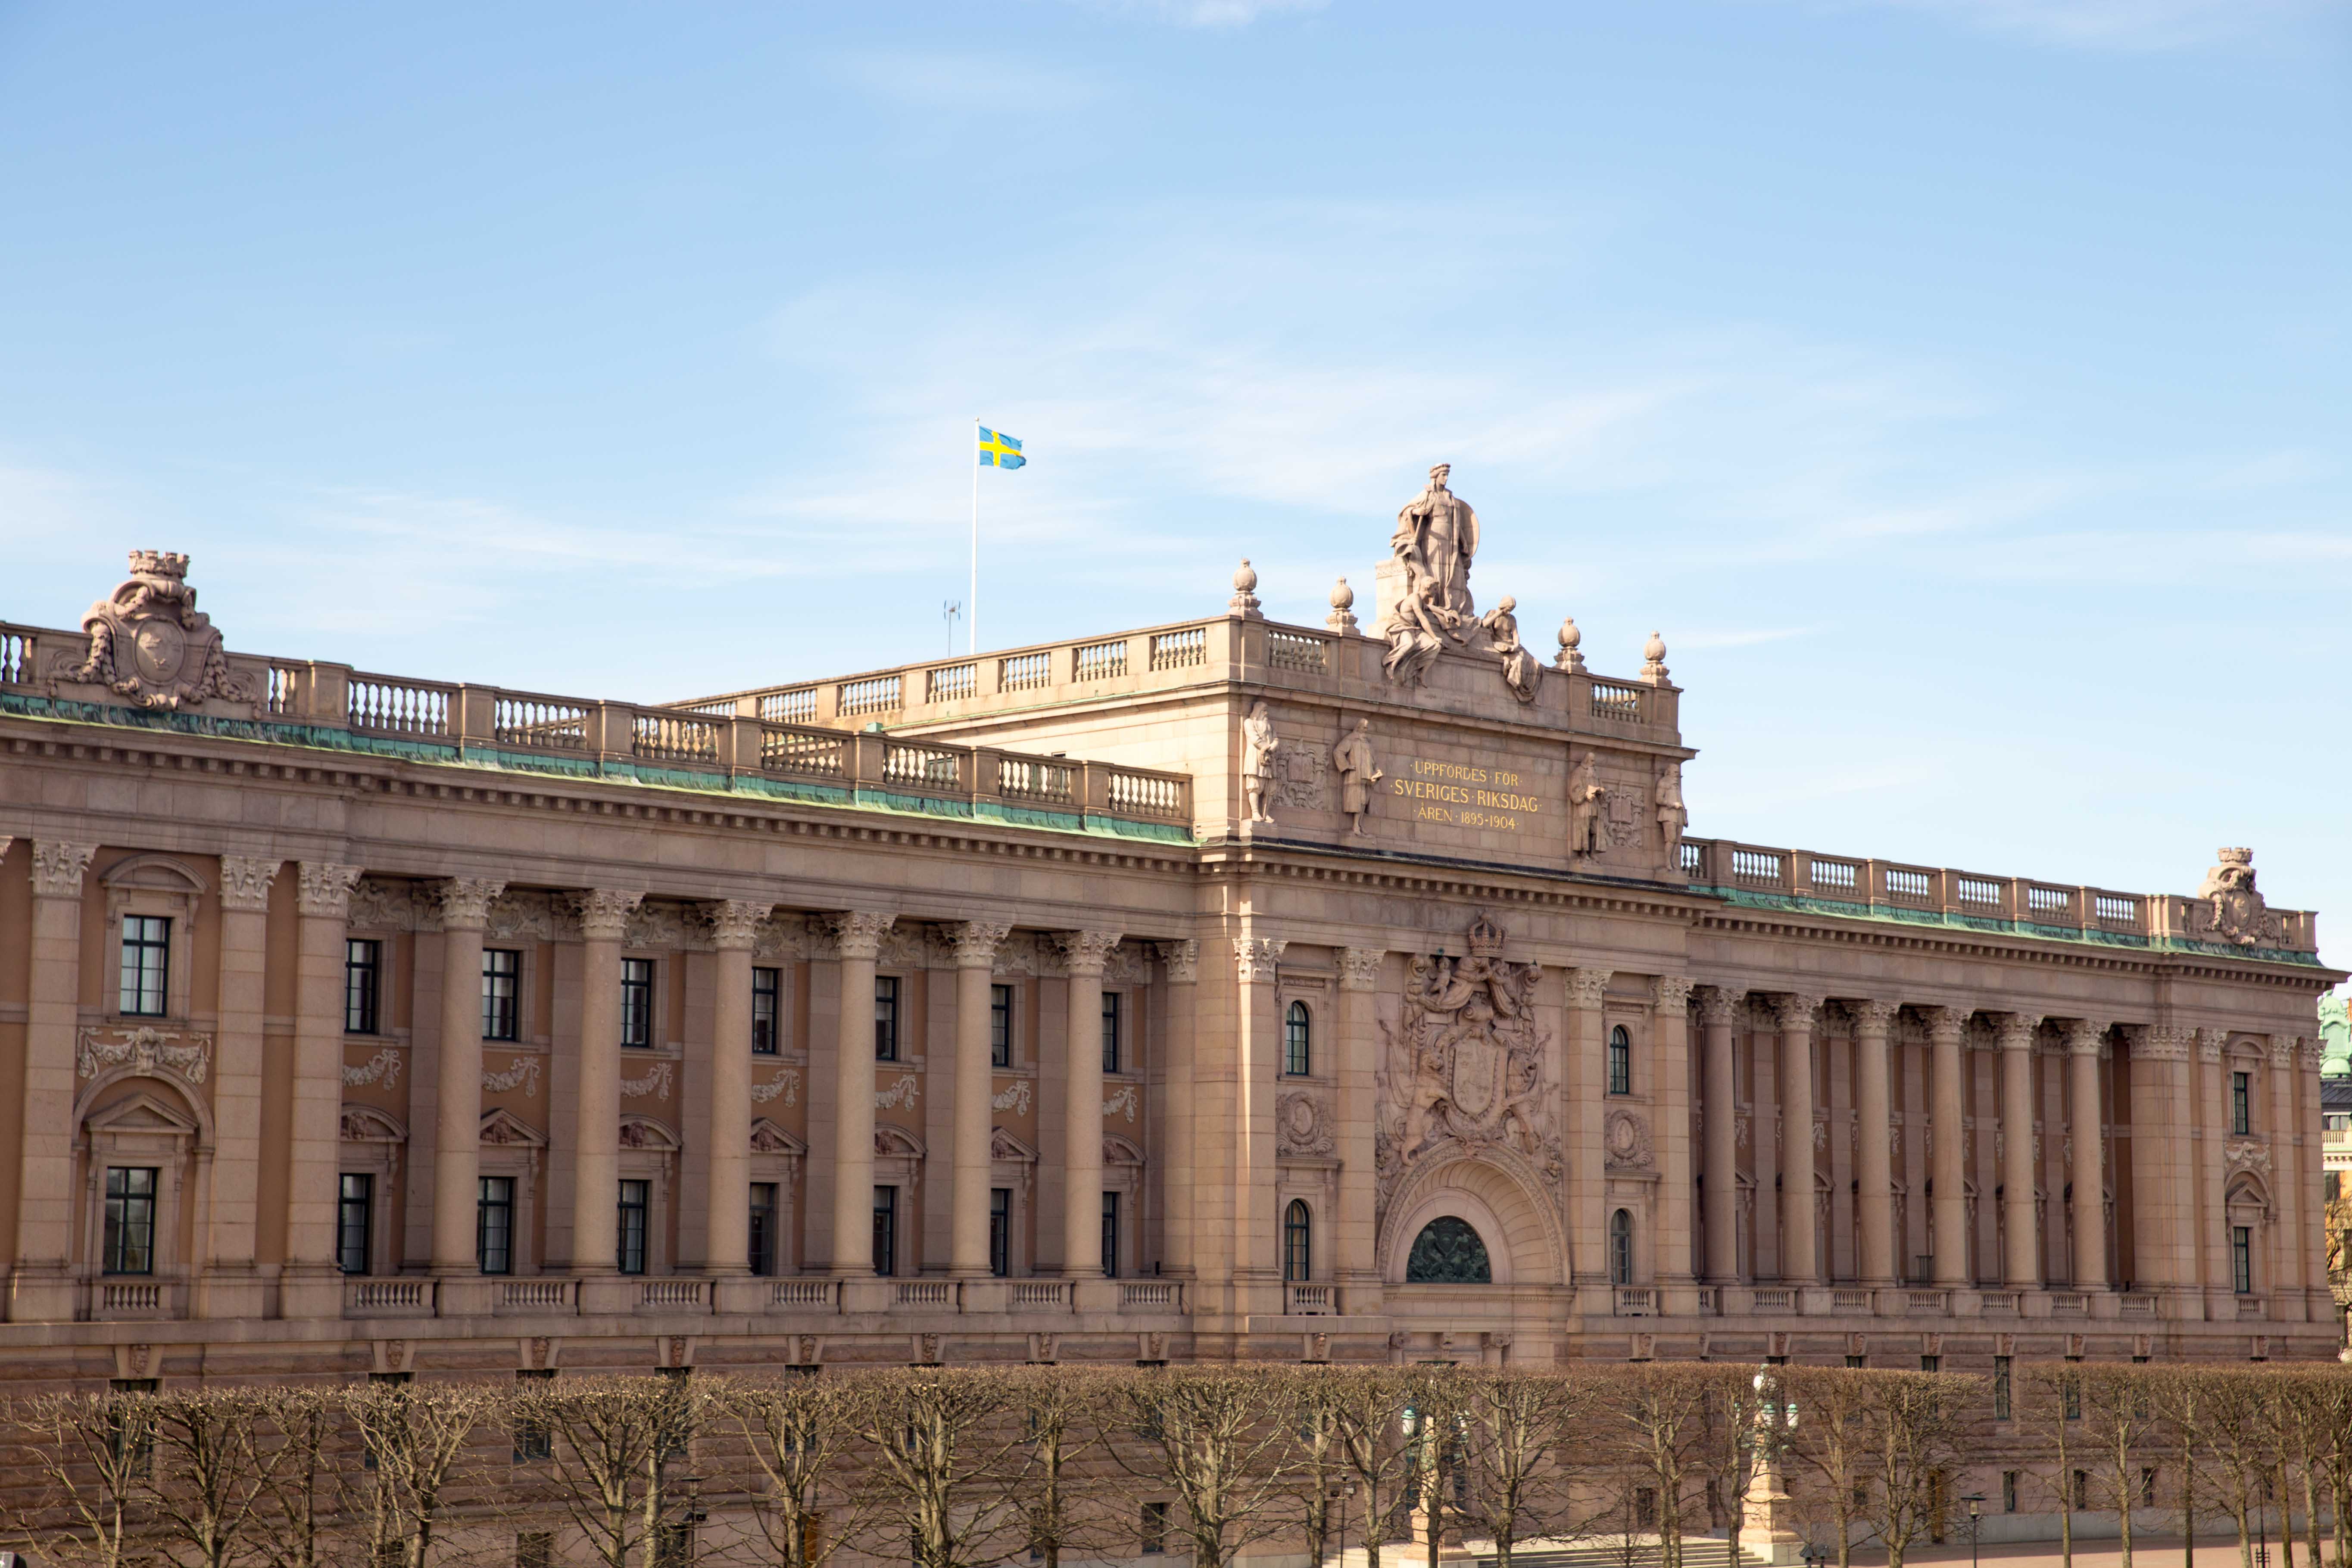 Parlement suedois riksdagshuset palais diete royale suede helgeandsholmen